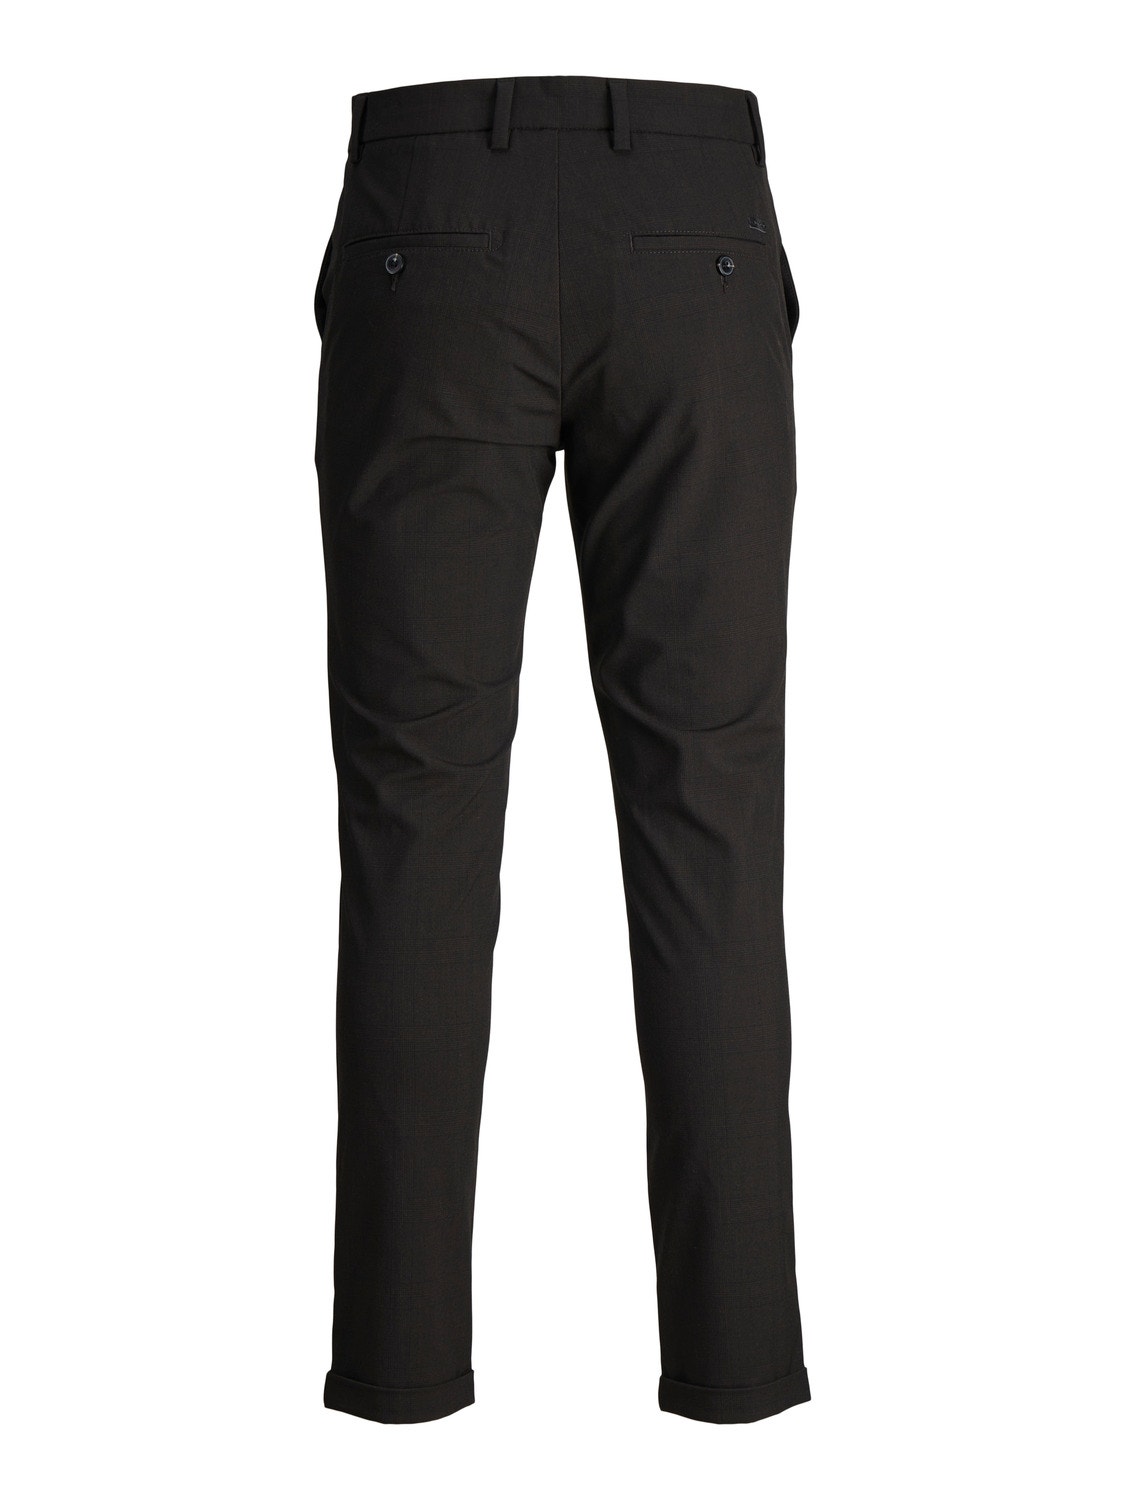 Jack & Jones Slim Fit Chino trousers -Chocolate Brown - 12193553